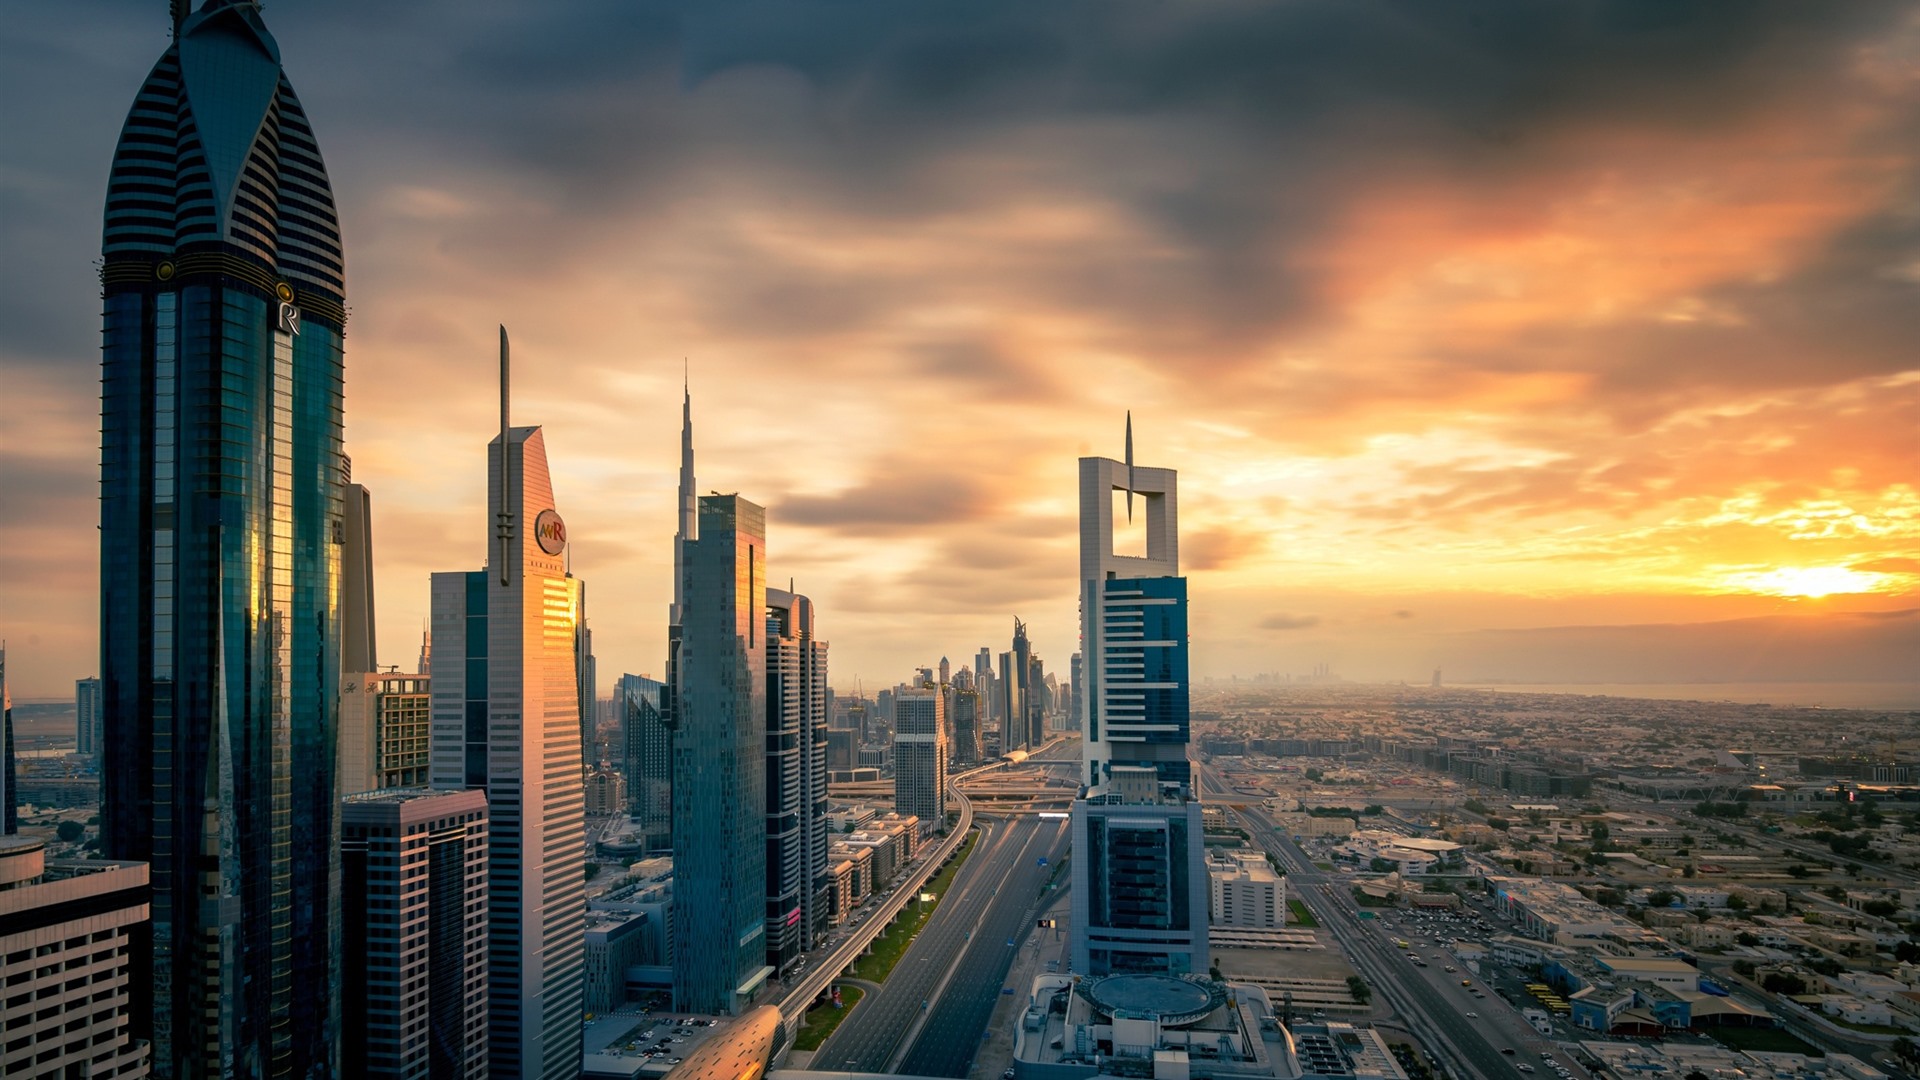 emirati arabi uniti,area metropolitana,paesaggio urbano,grattacielo,area urbana,cielo